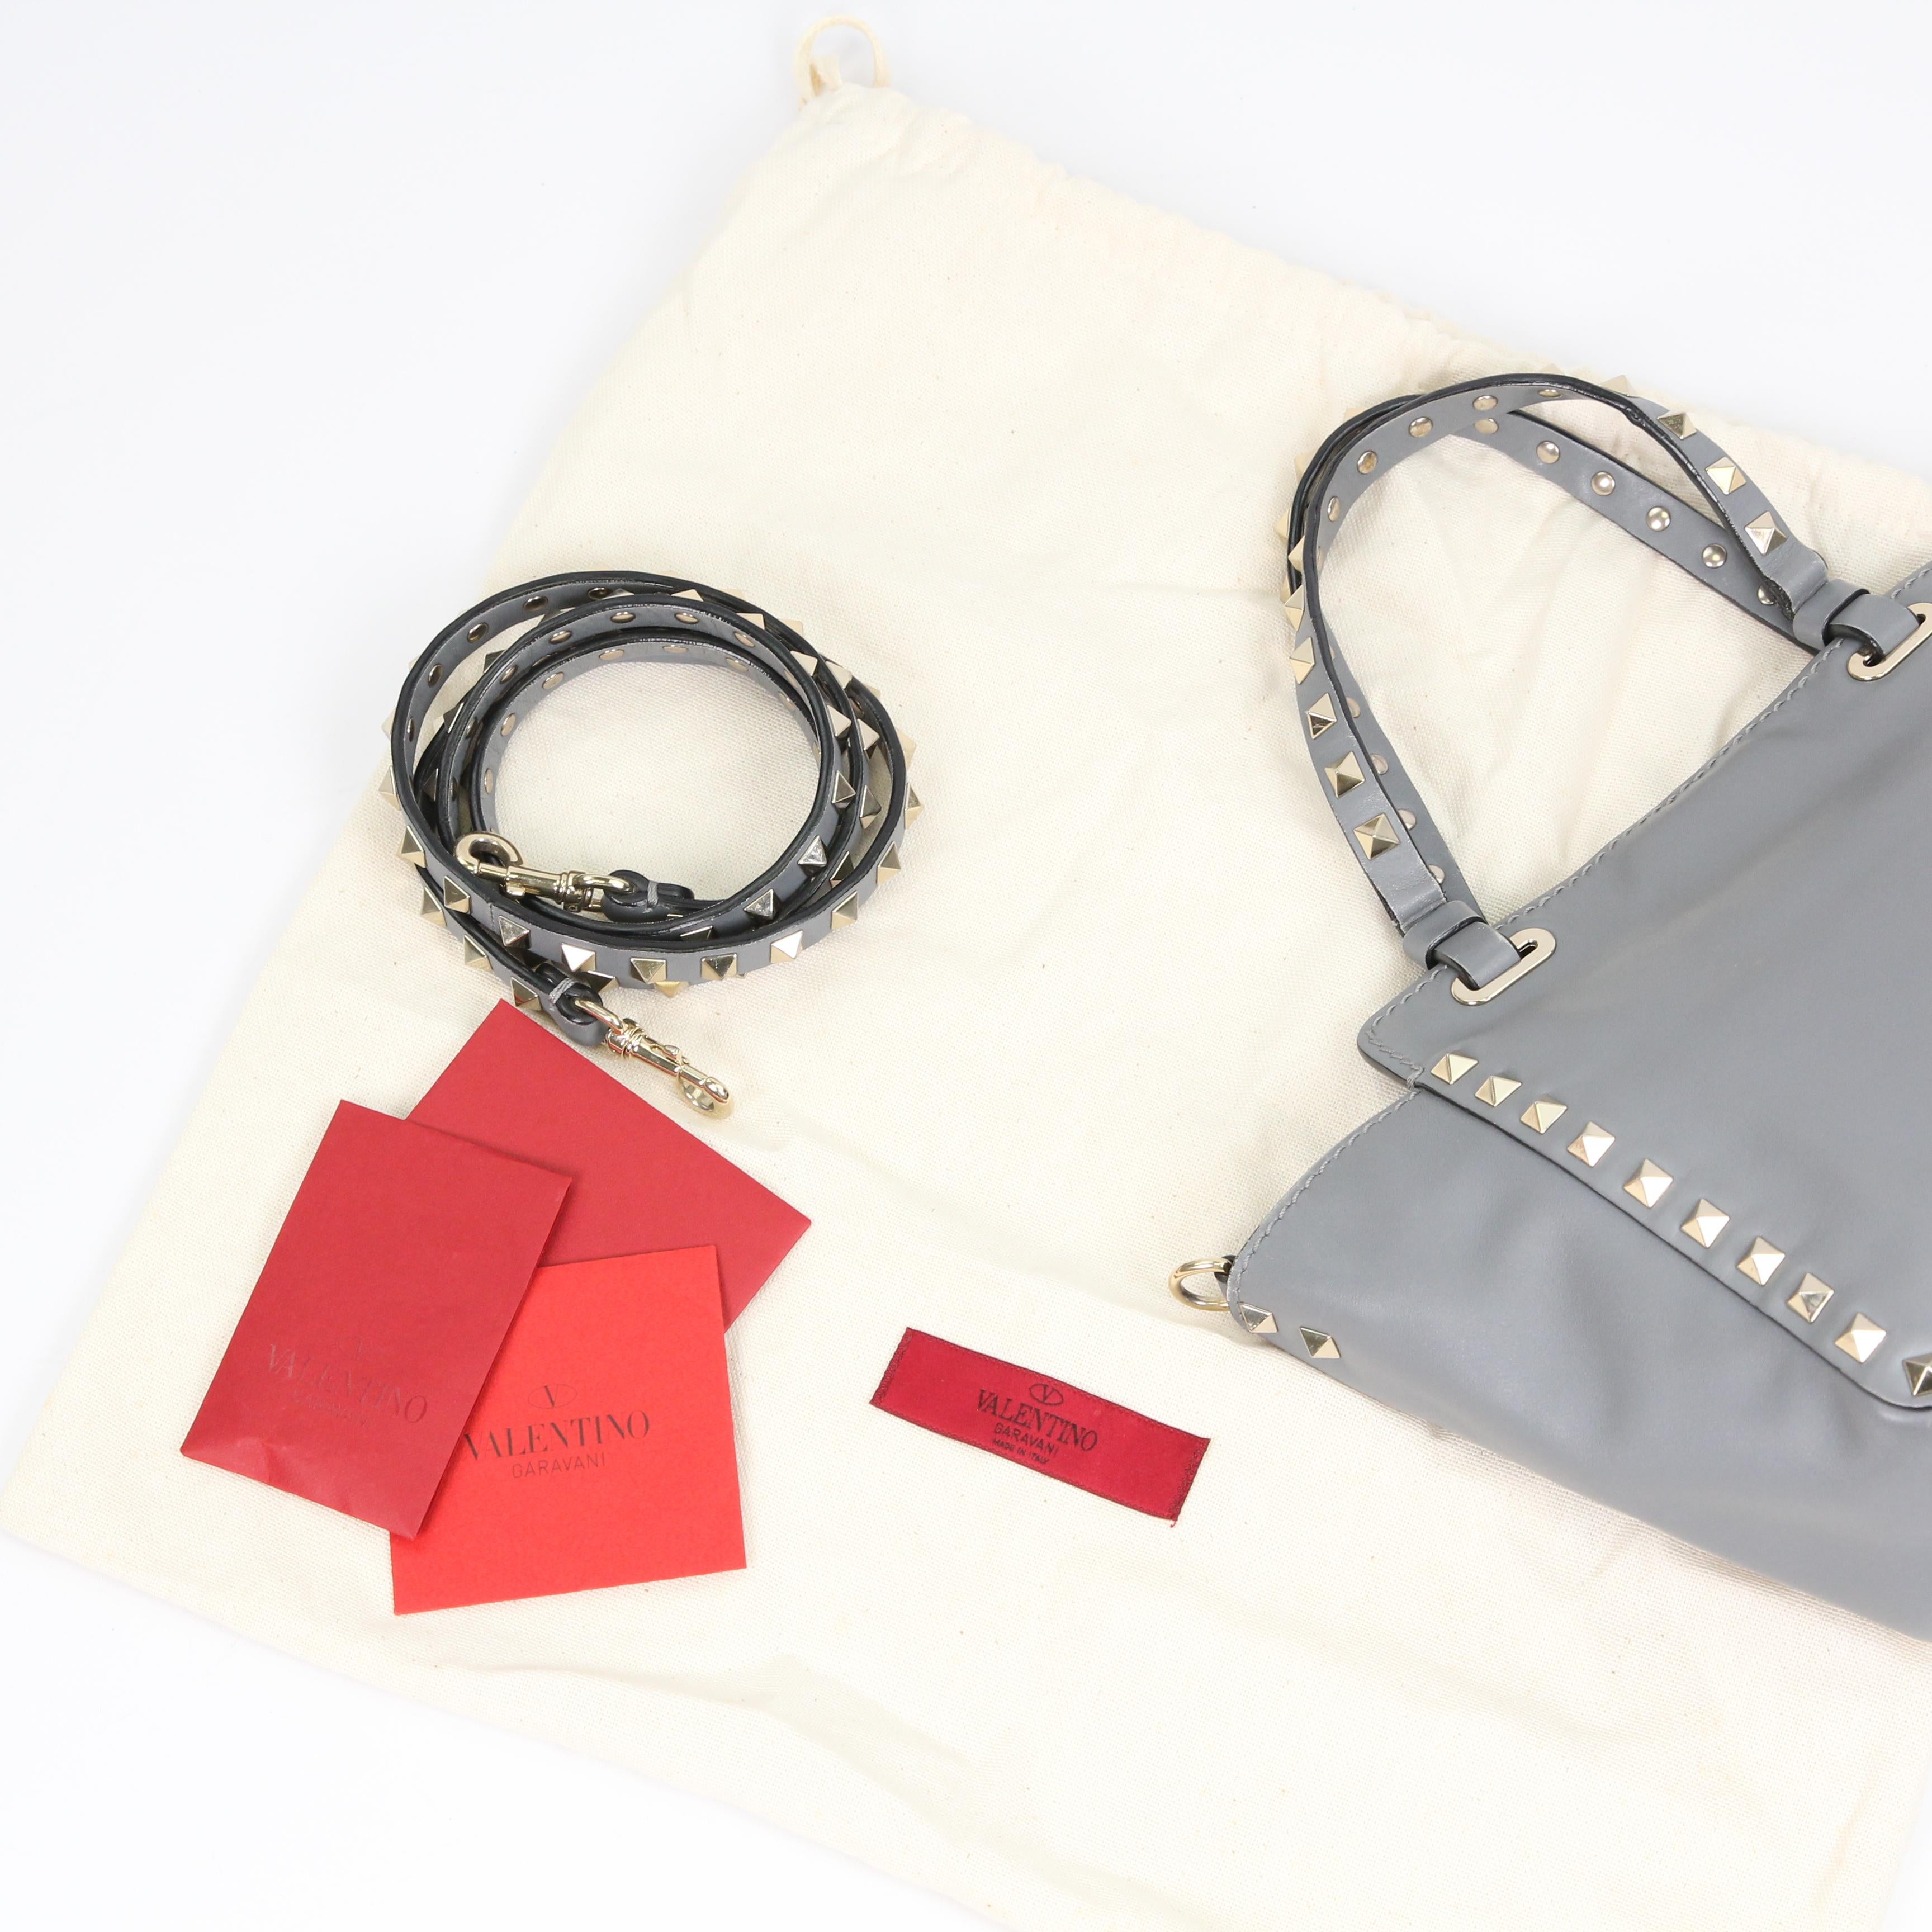 Valentino Garavani Rockstud leather handbag For Sale 6